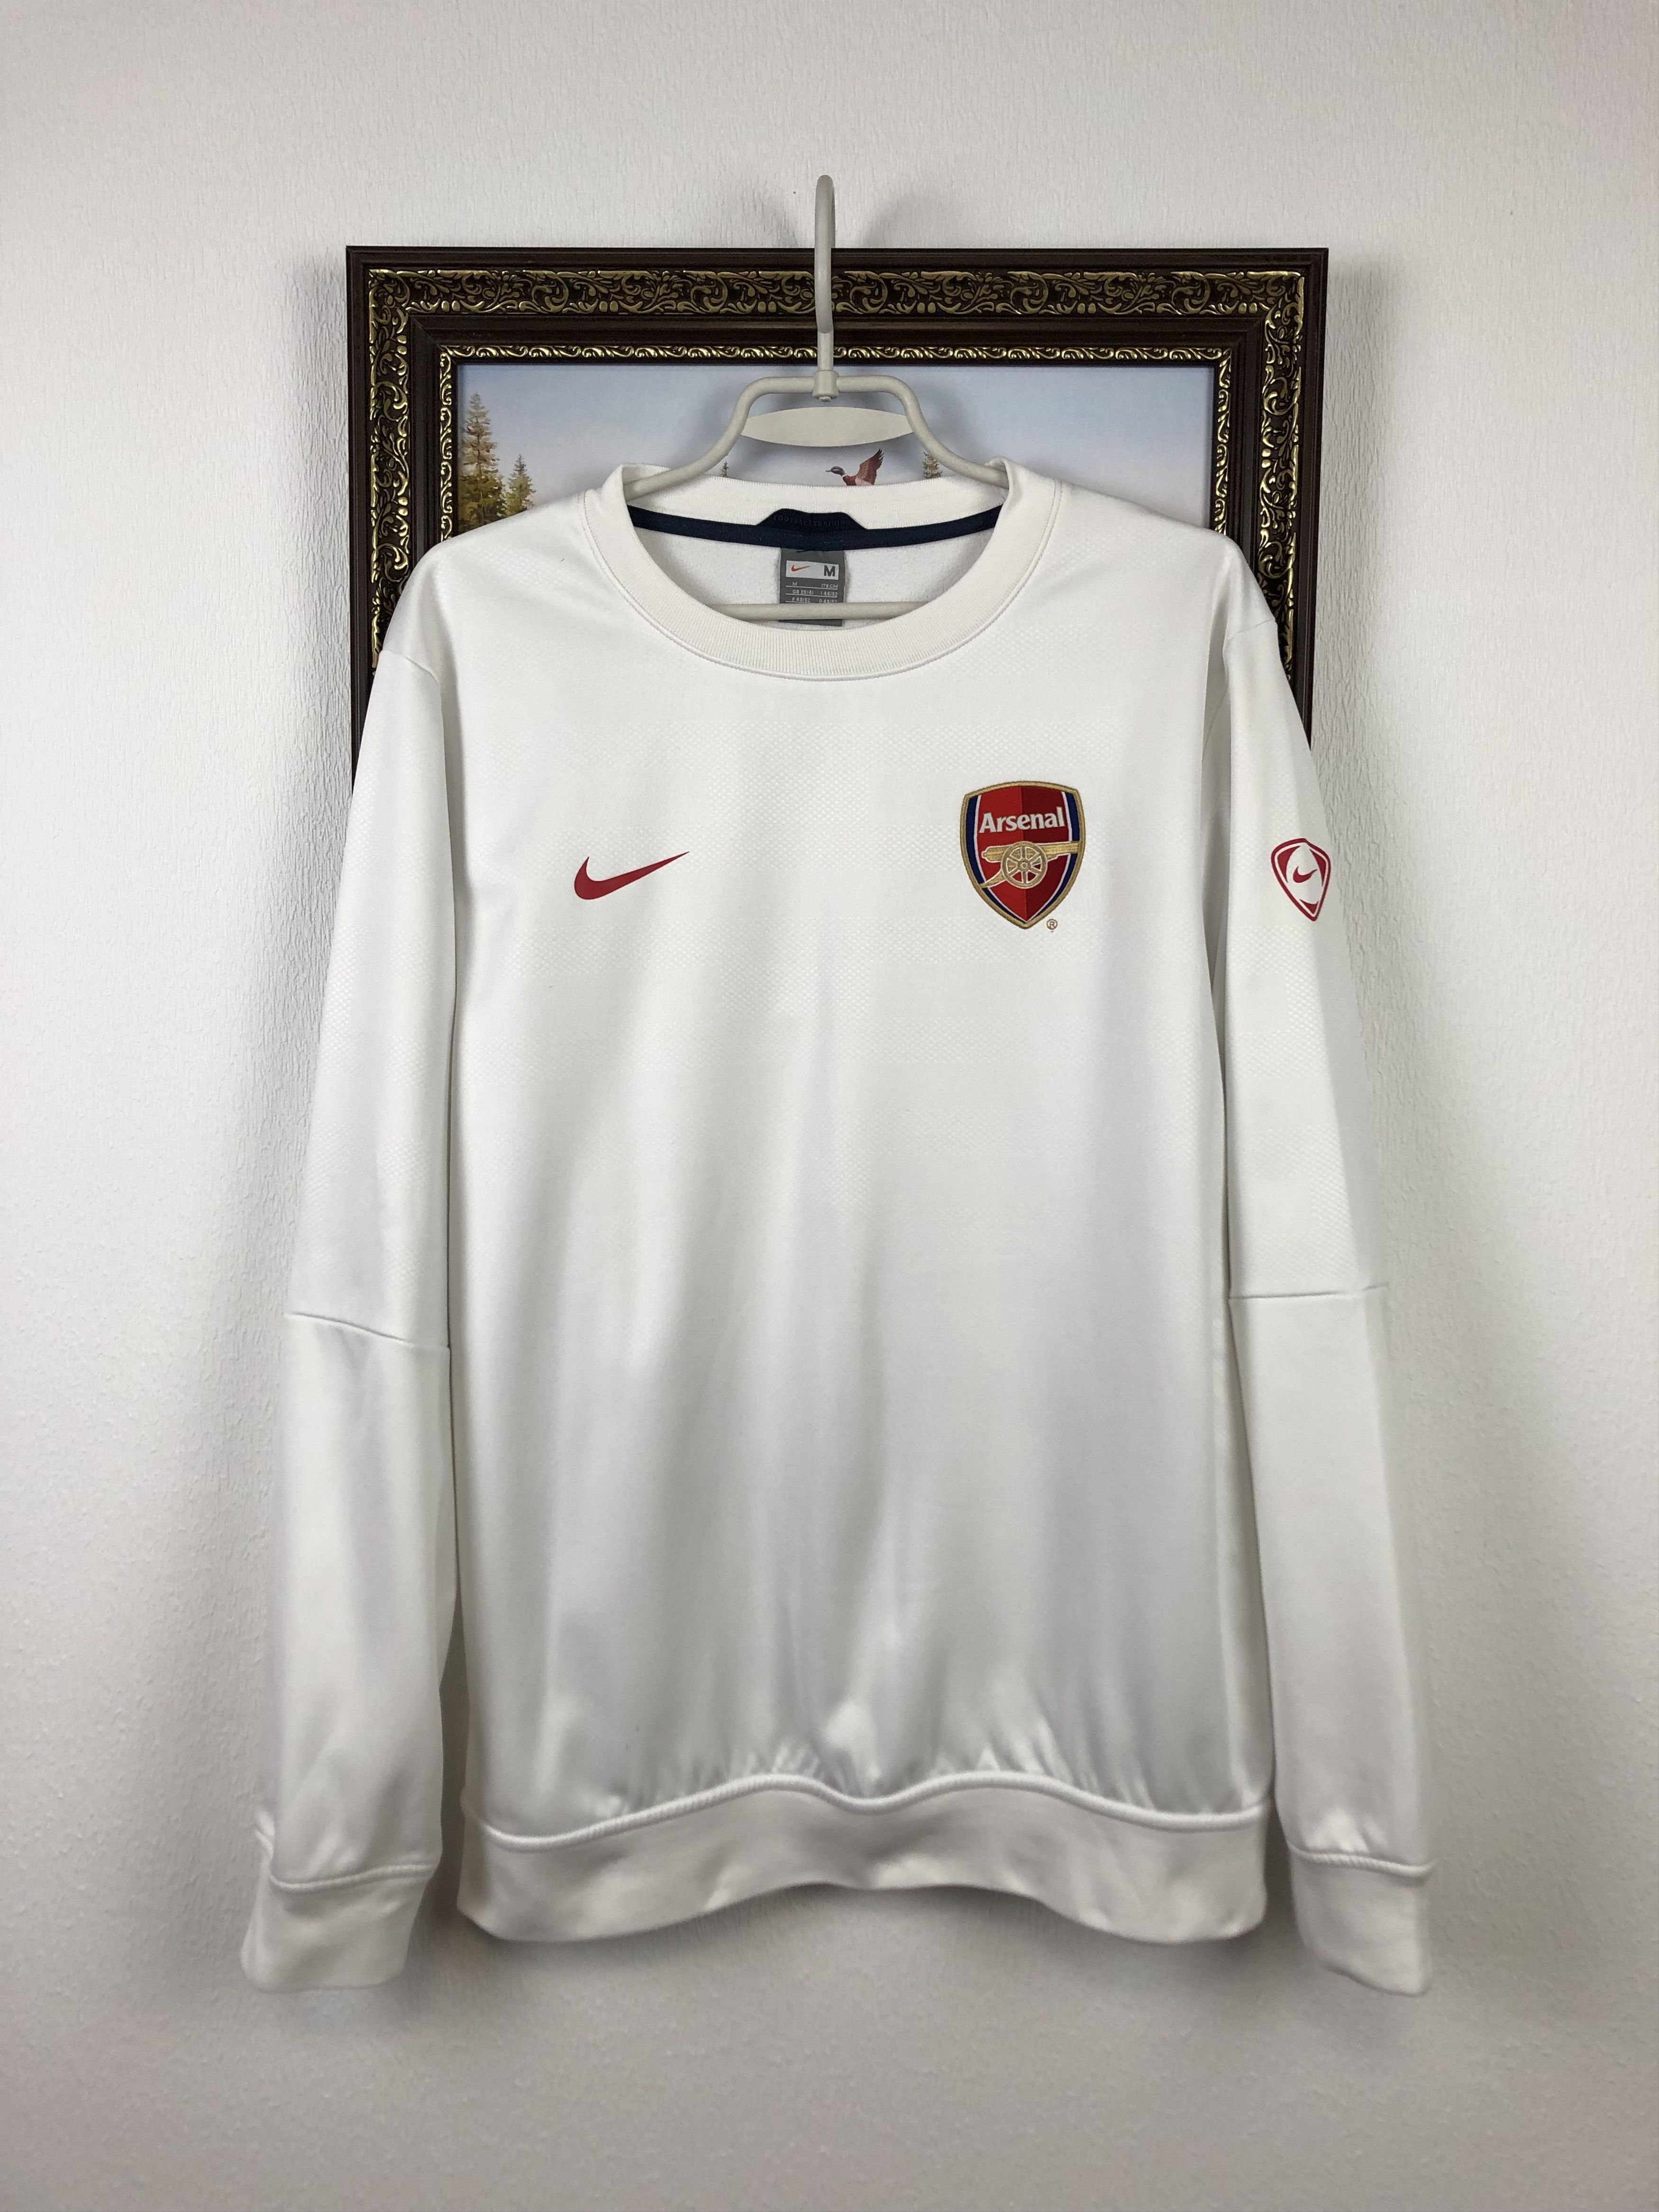 Nike Nike Arsenal Vintage o2 Total 90 Sweatshirt Football Soccer 